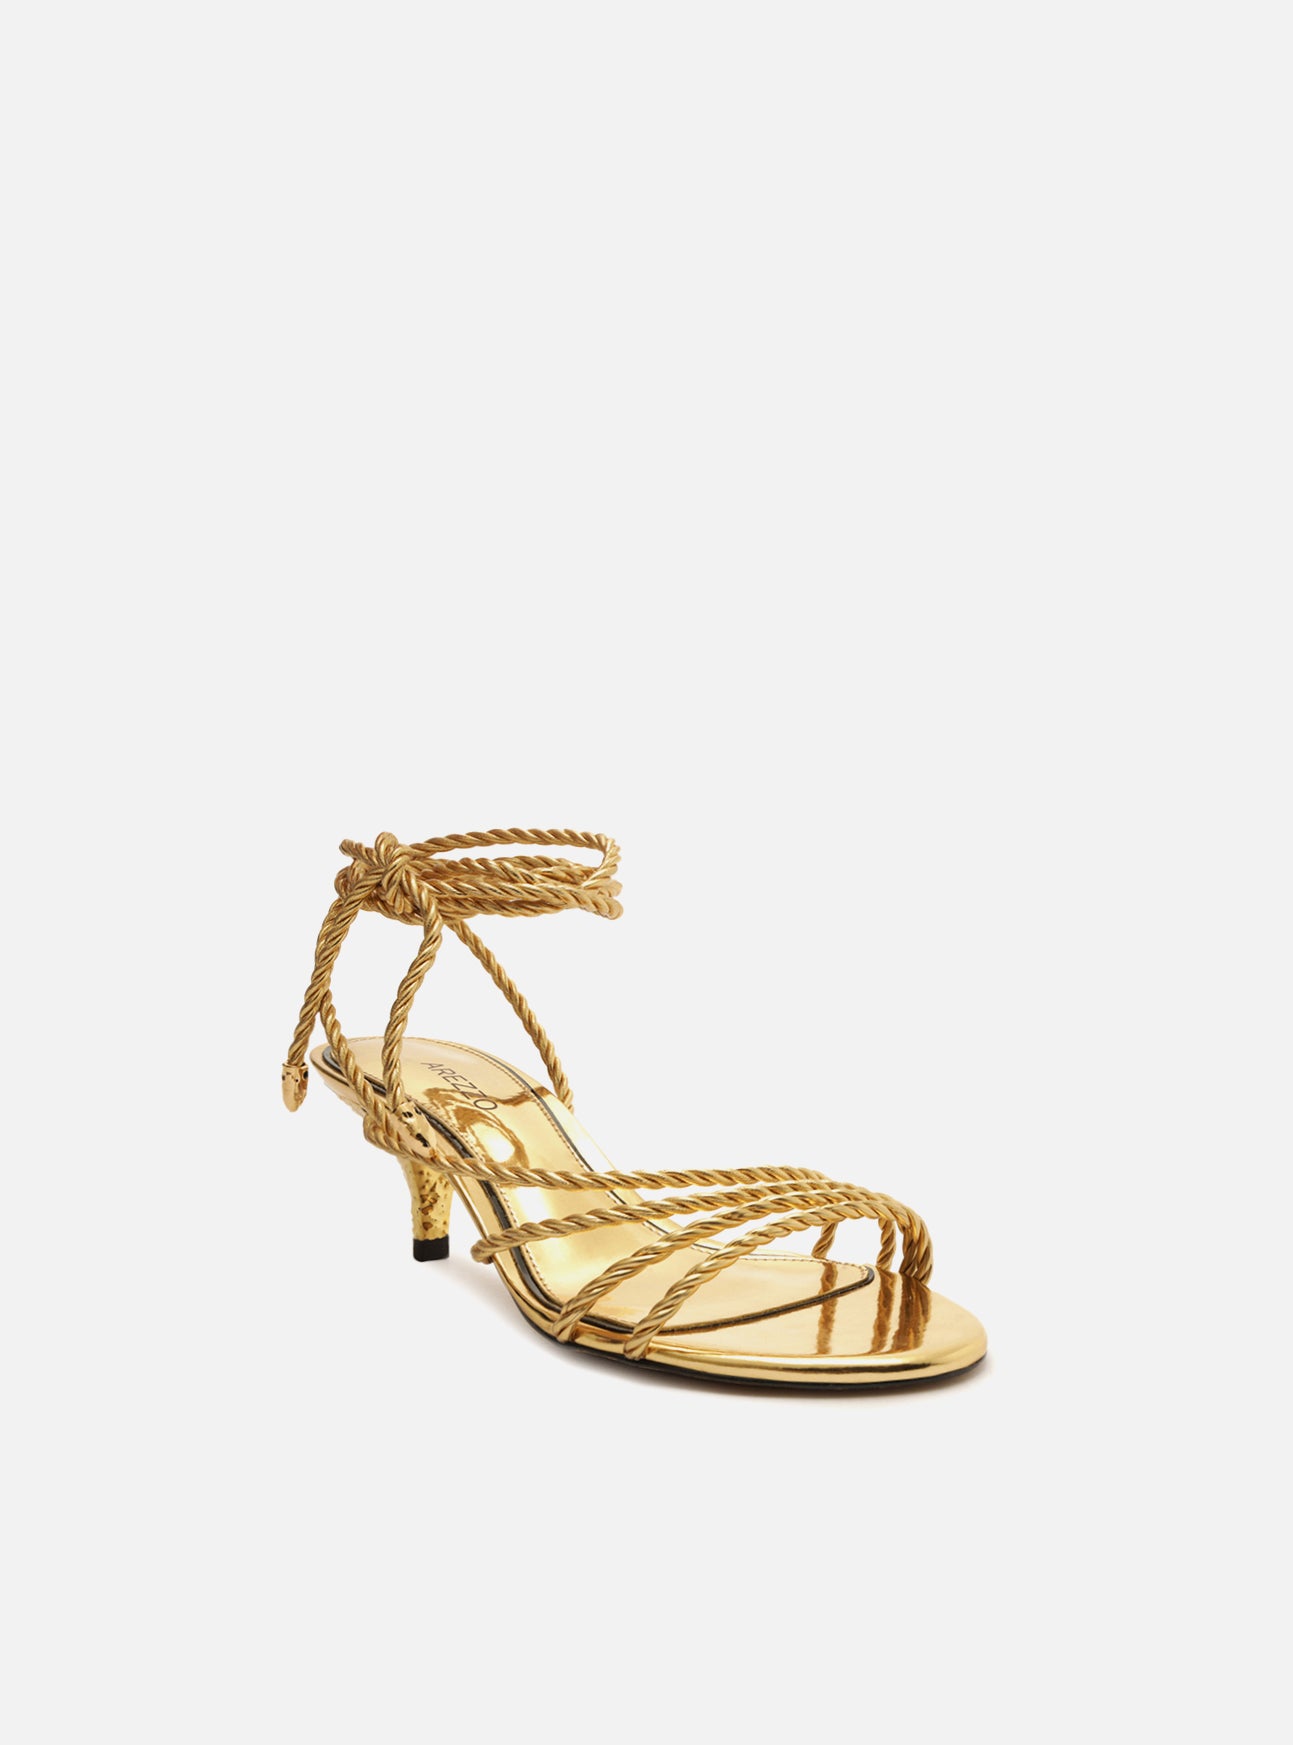 Floral Embroidered Yellow-Gold Heels | Heels, Gold heels, Floral heels